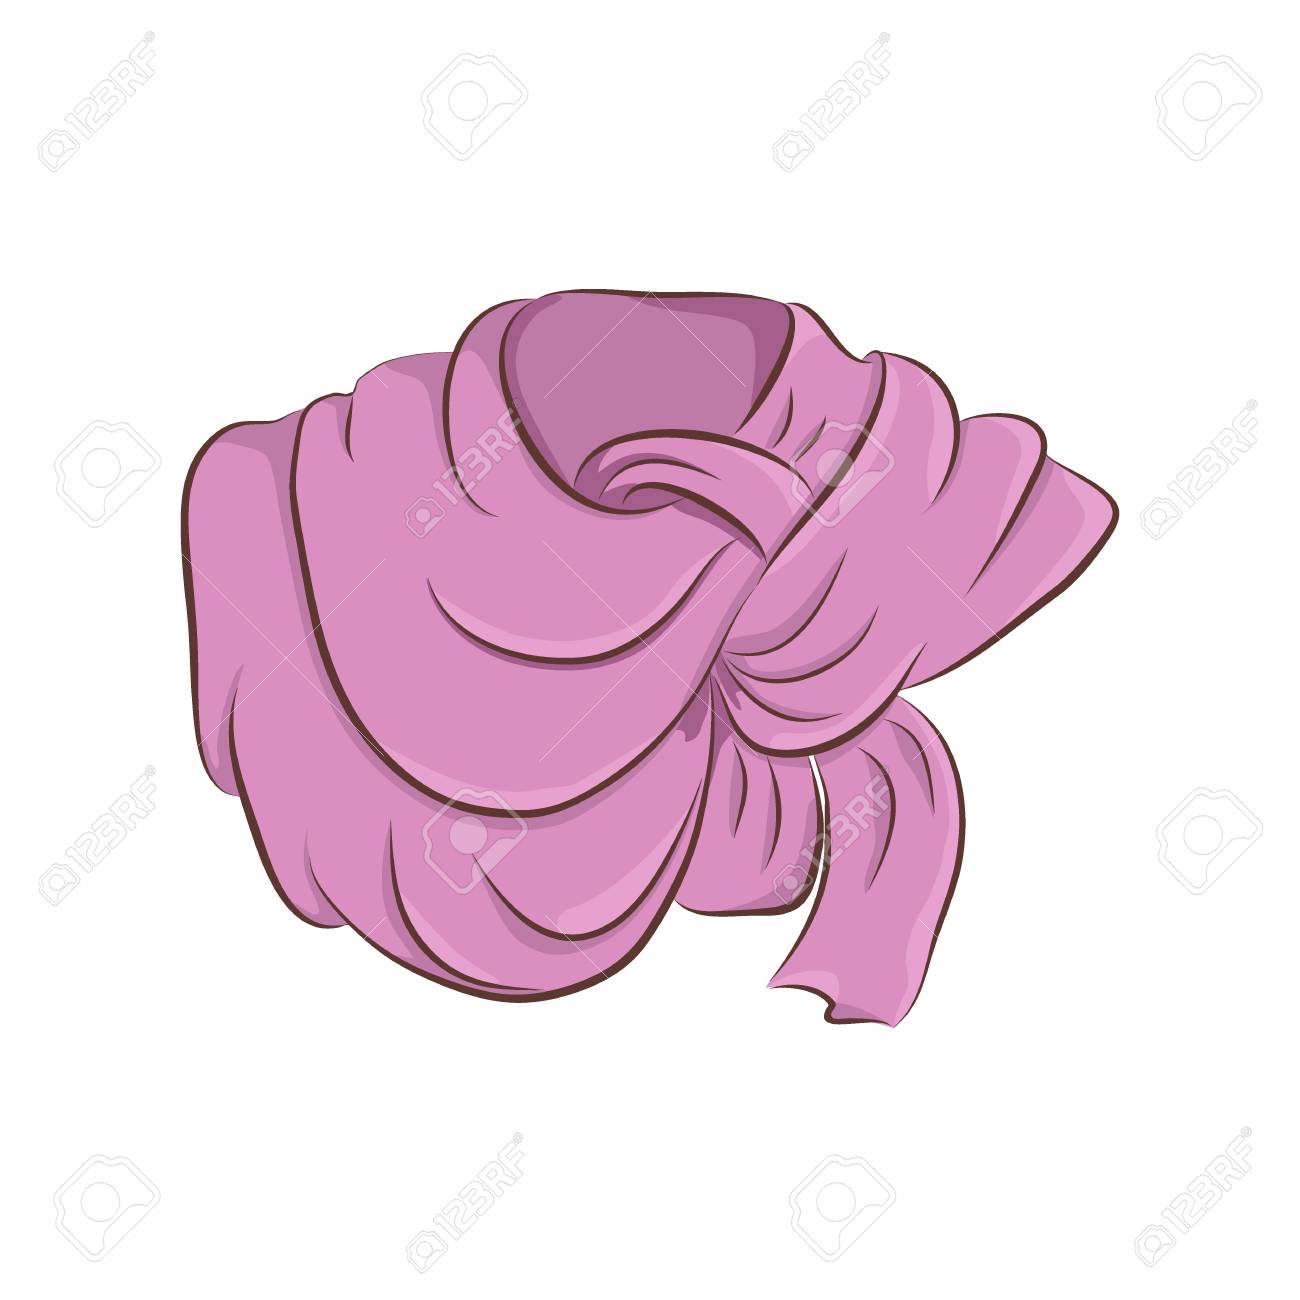 Realistic Scarf Or Shawl Women Fashion Accessories Purple Object